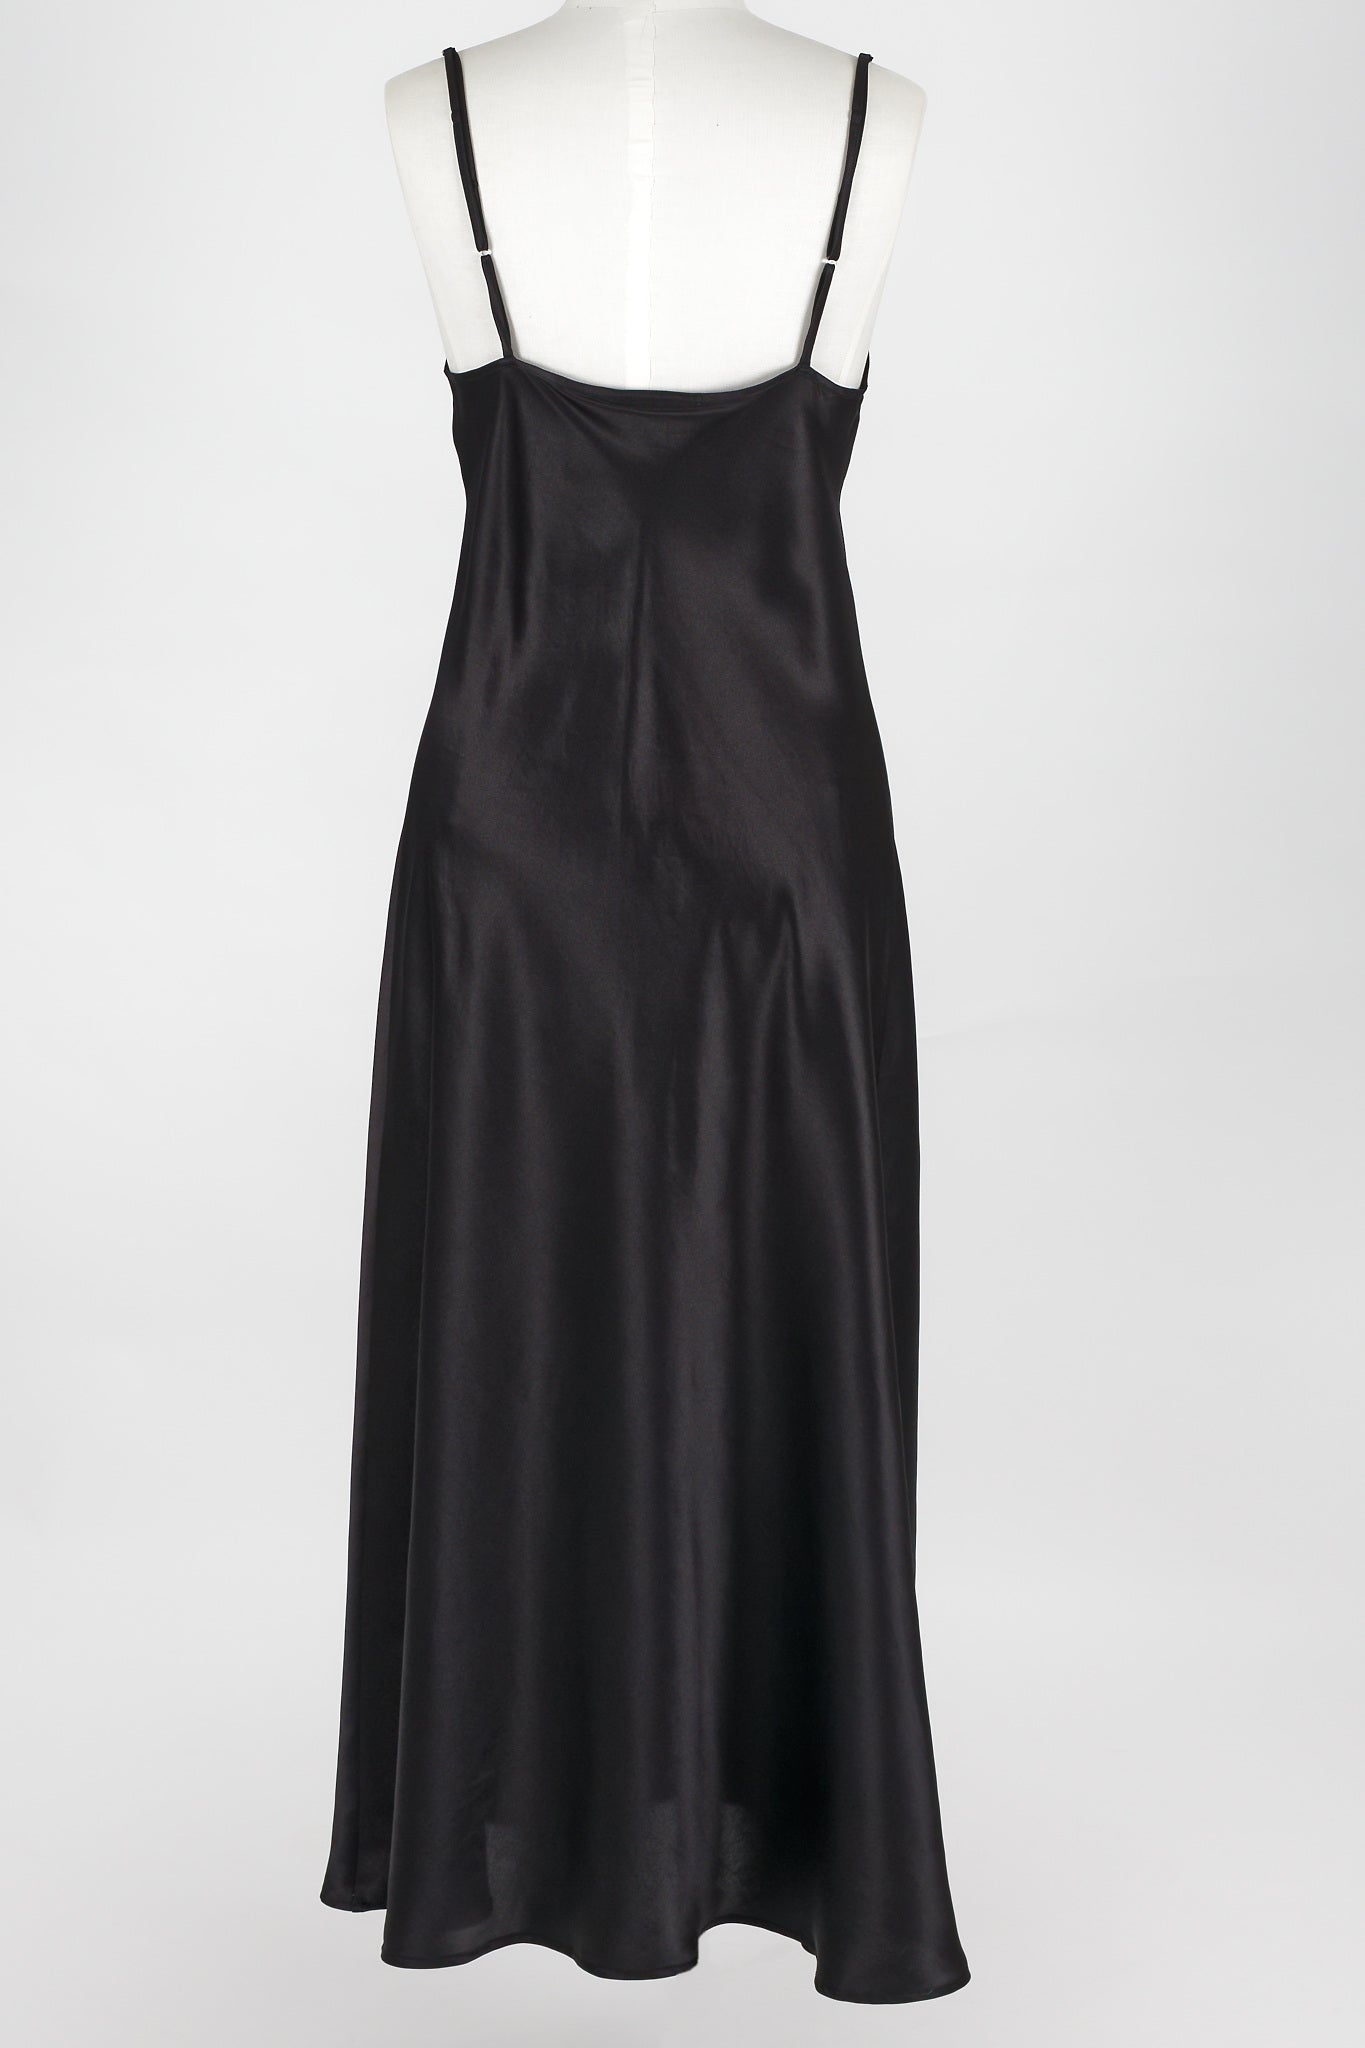 Long silk chemise in black view back from Carmen Kirstein